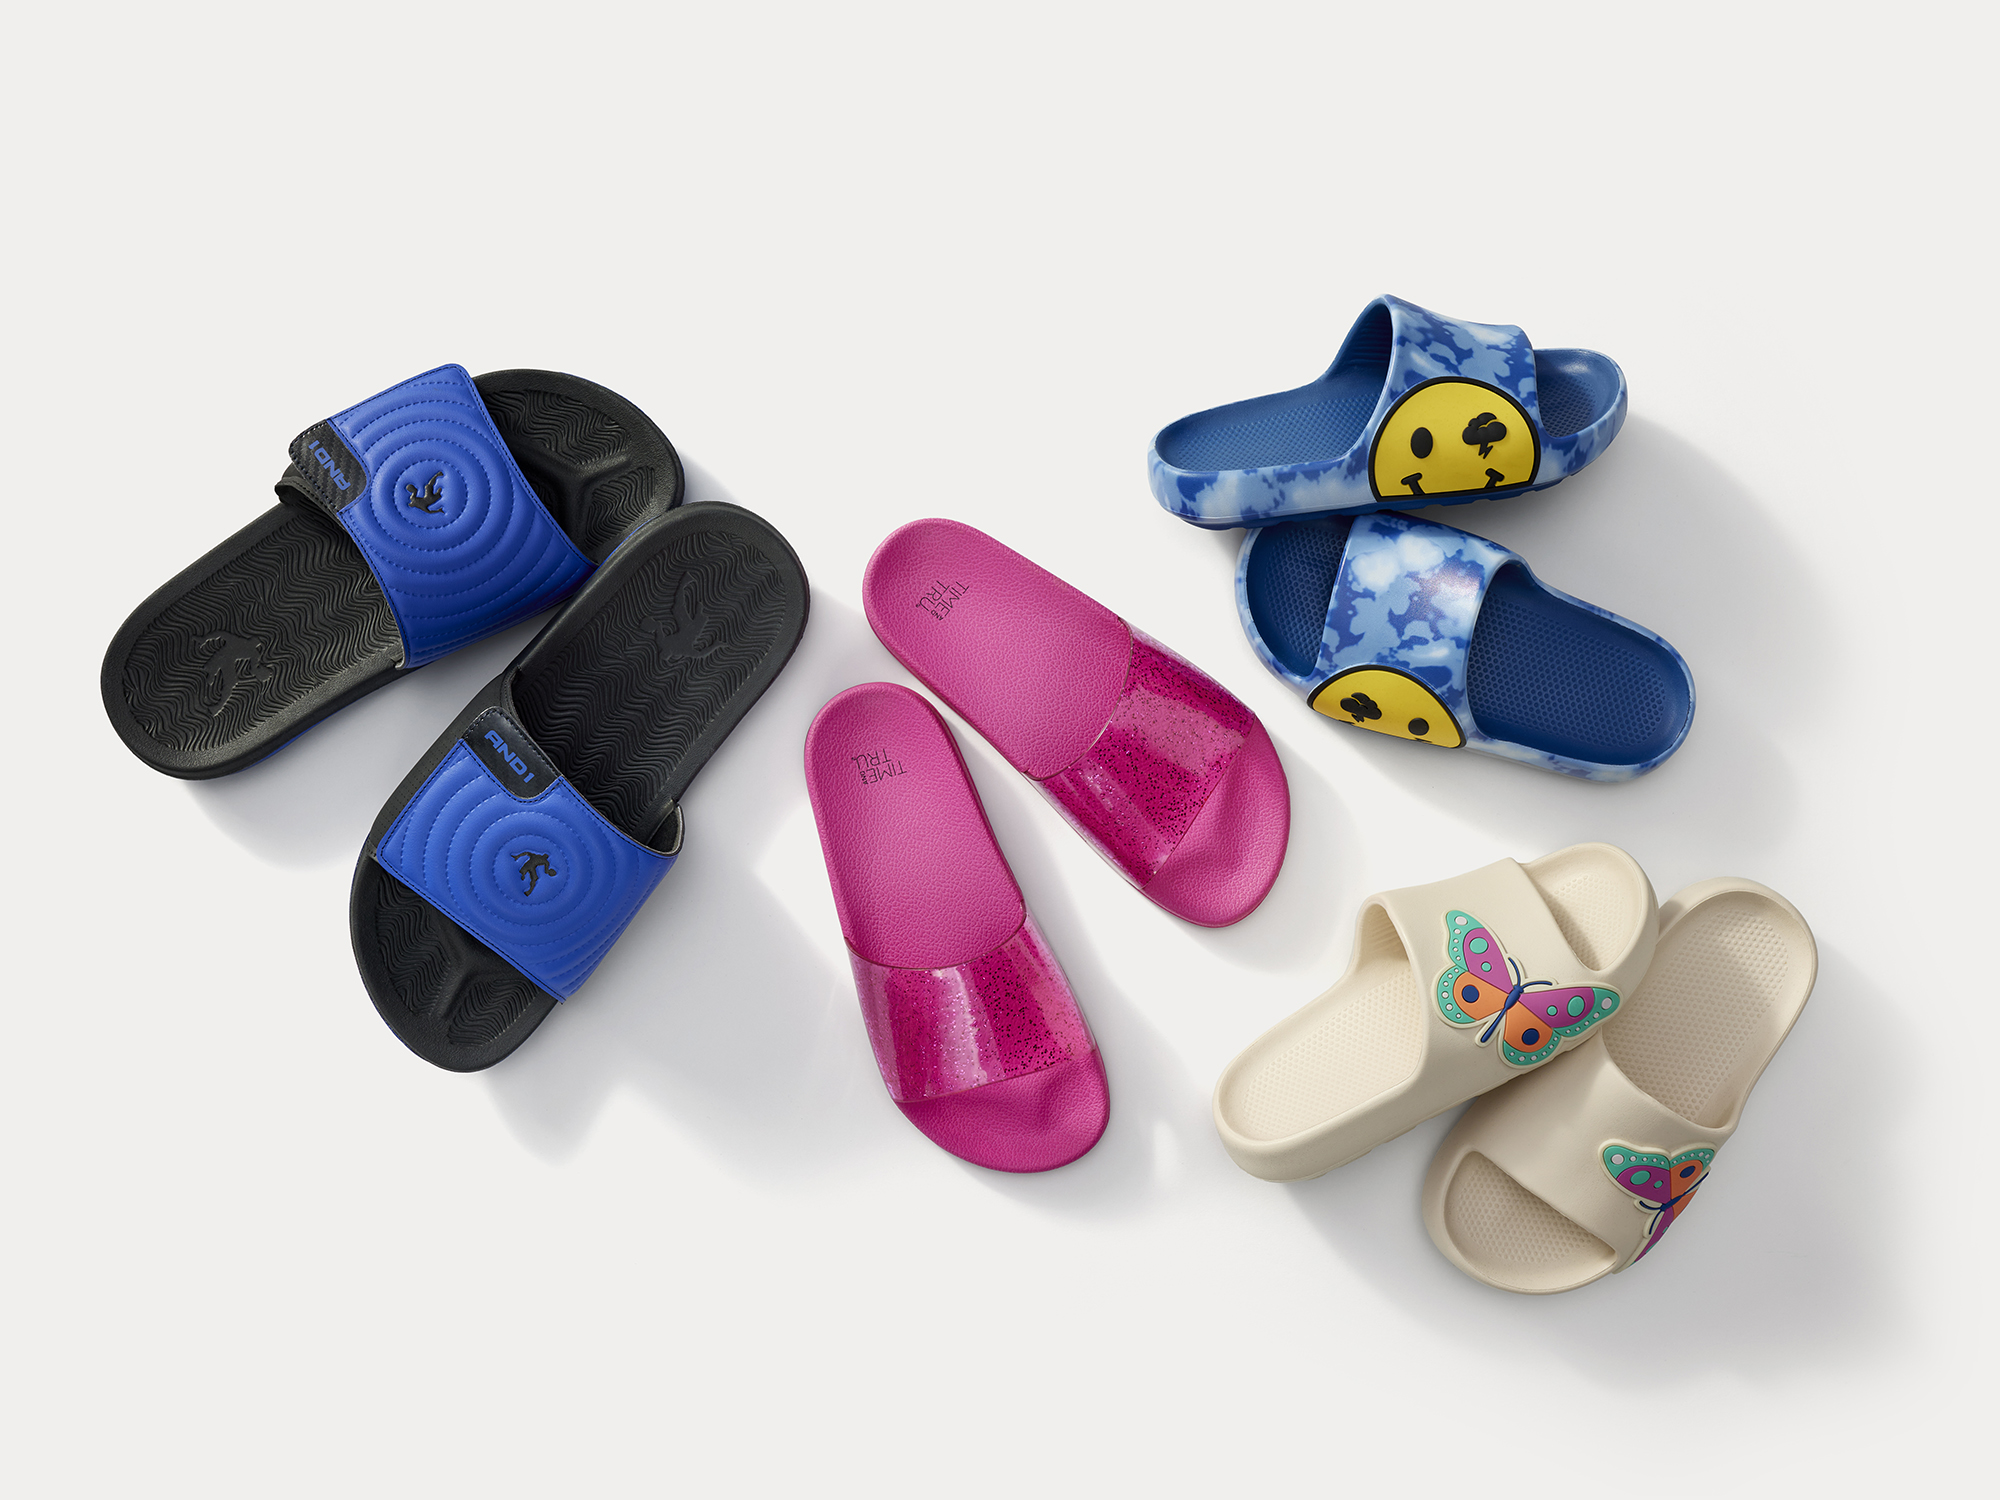 AND1 Men’s Athletic Adjustable Swirl Slide Sandals - Walmart.com